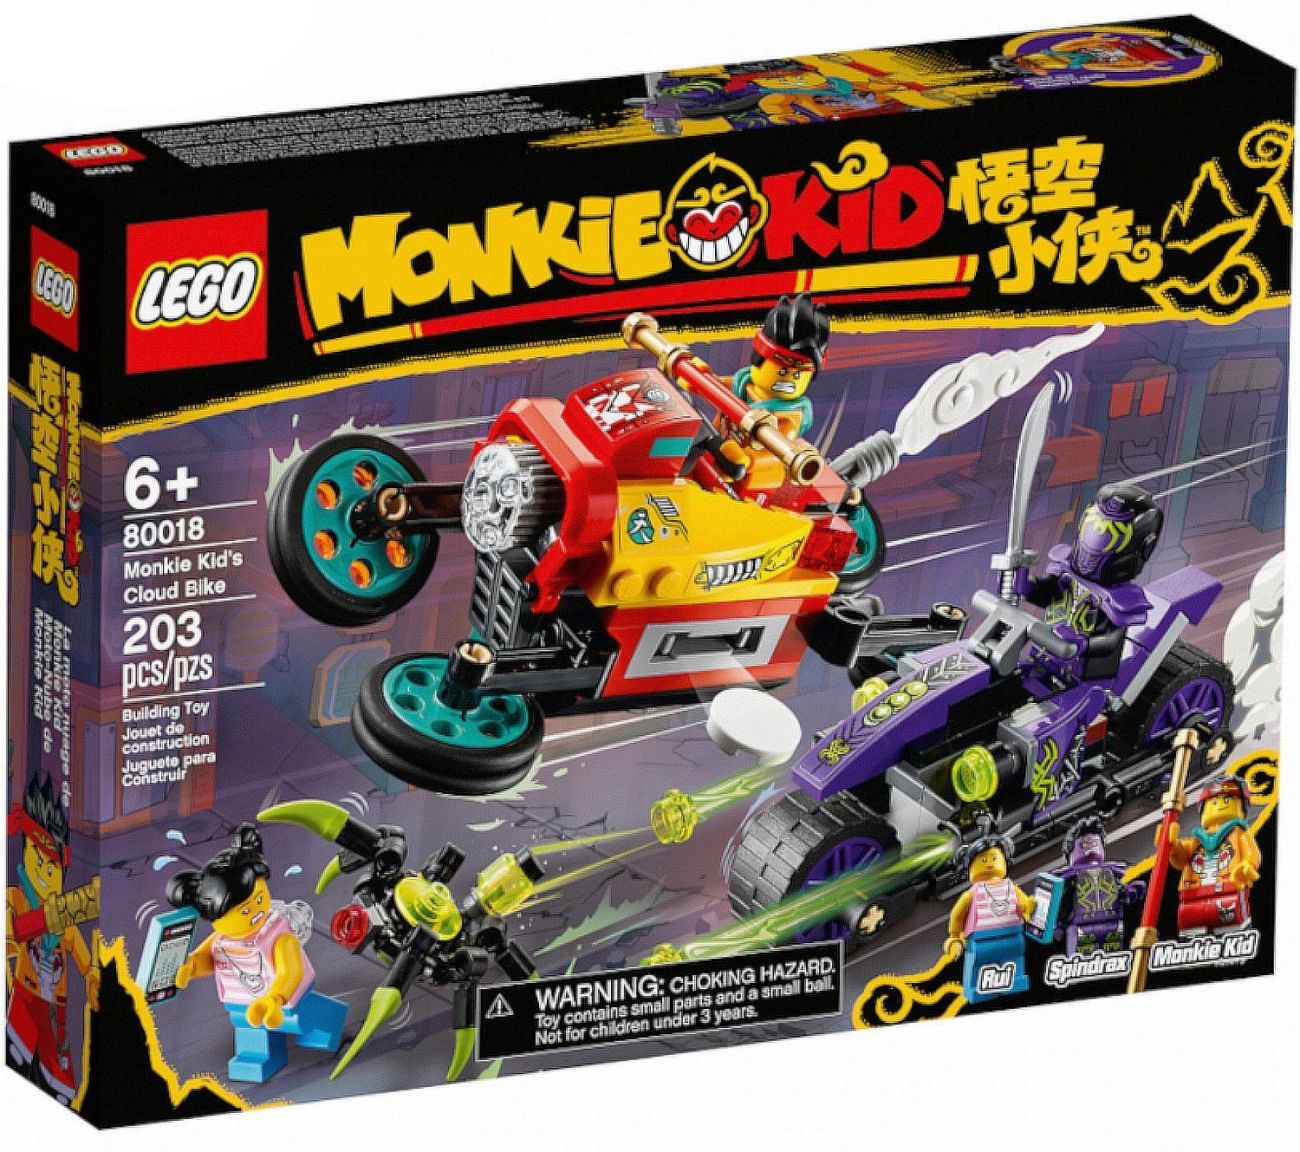 LEGO MOnkie Kid 2021 Neuheiten - Monkie Kids Cloud Bike